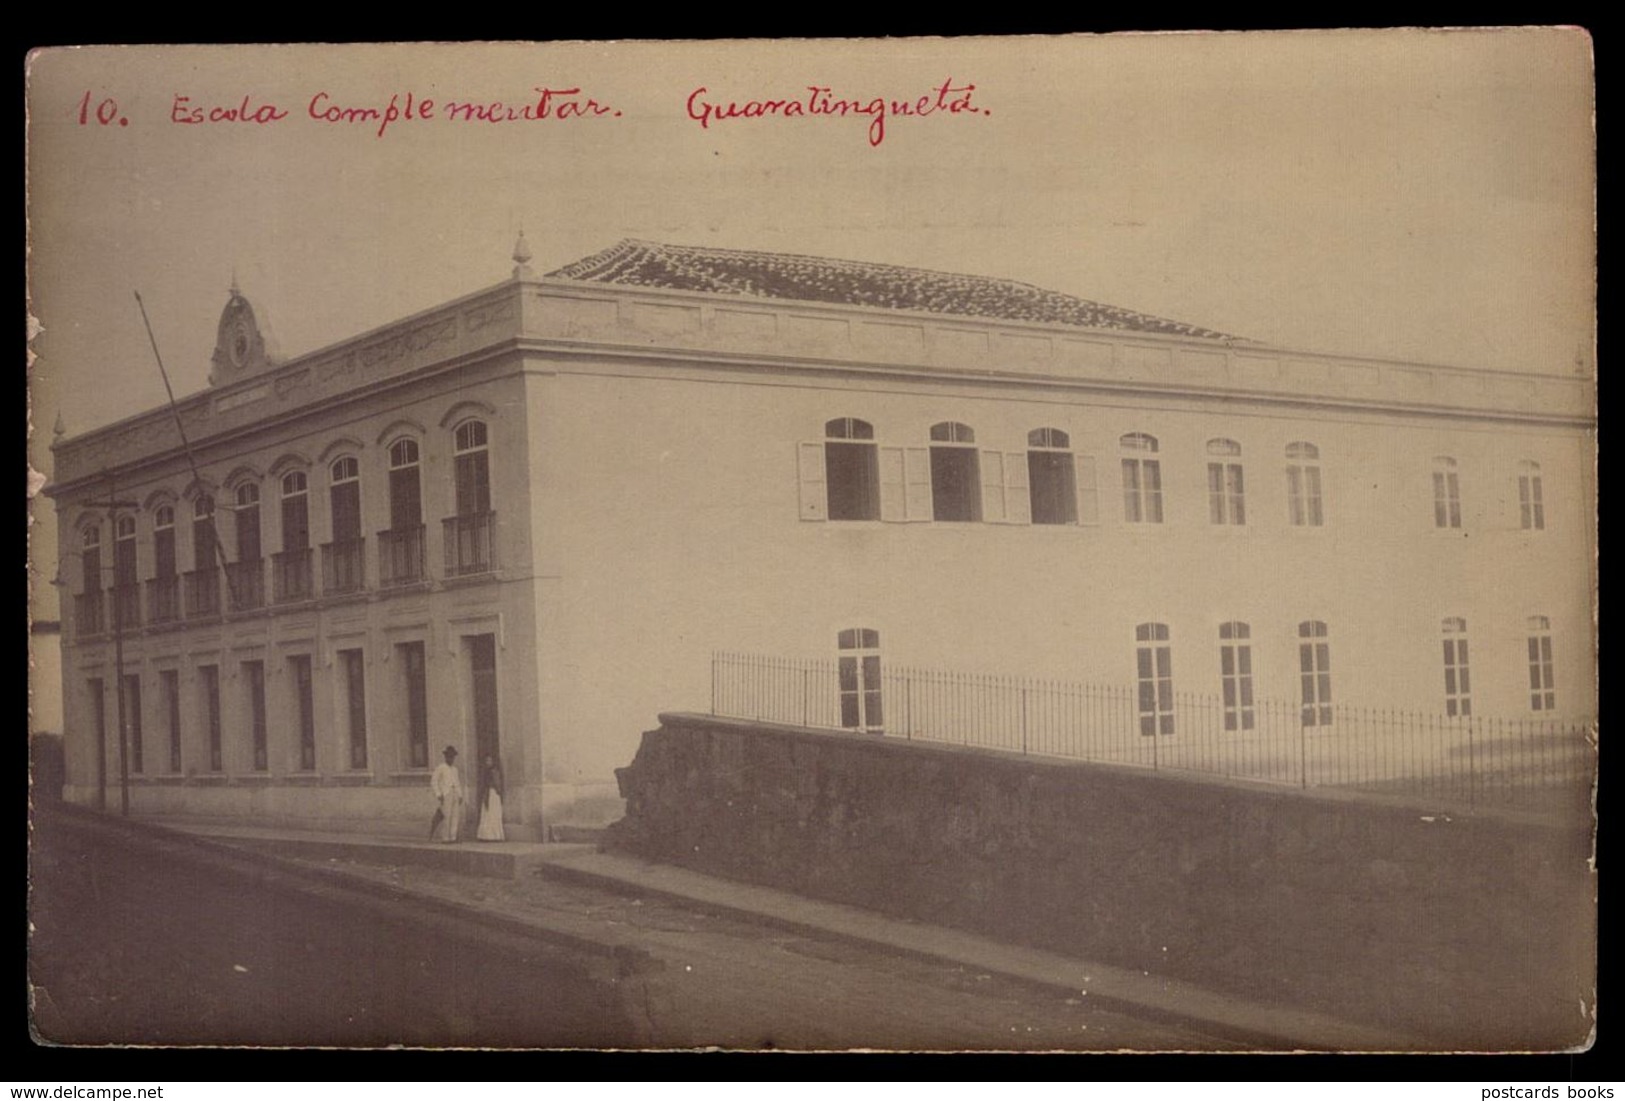 POSTAL FOTOGRAFICO: Escola Complementar GUARATINGUETÁ S.Paulo BRASIL - Old Real Photo Postcard BRAZIL 1900s - Rio De Janeiro